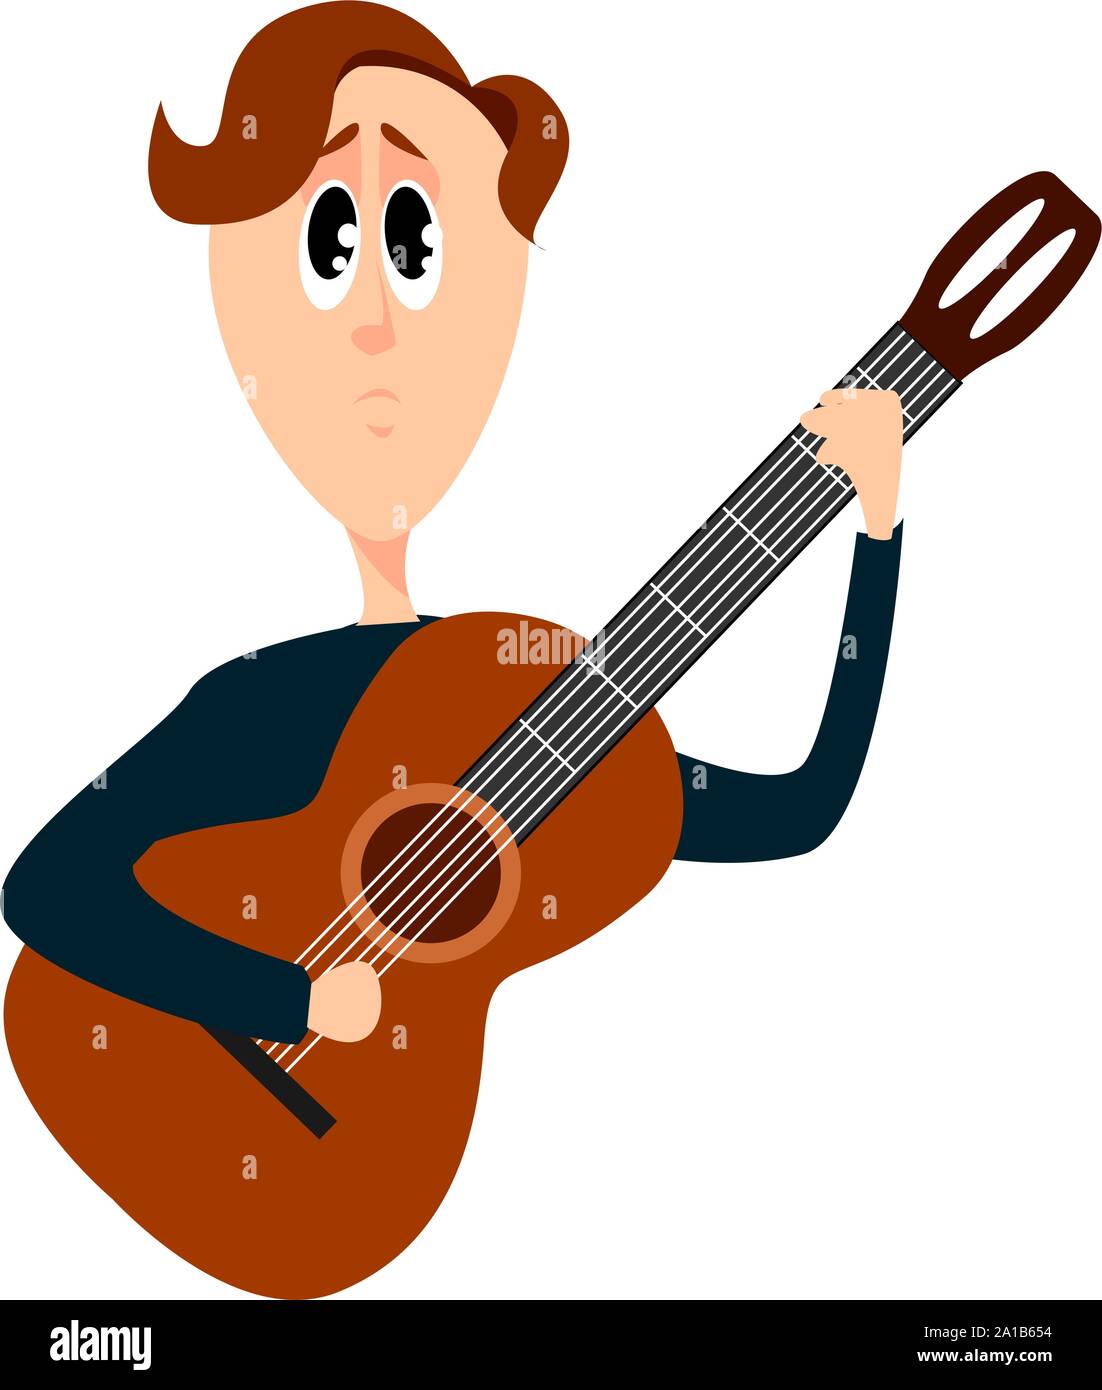 Guitar player, illustration, vector on white background. Stock Vector